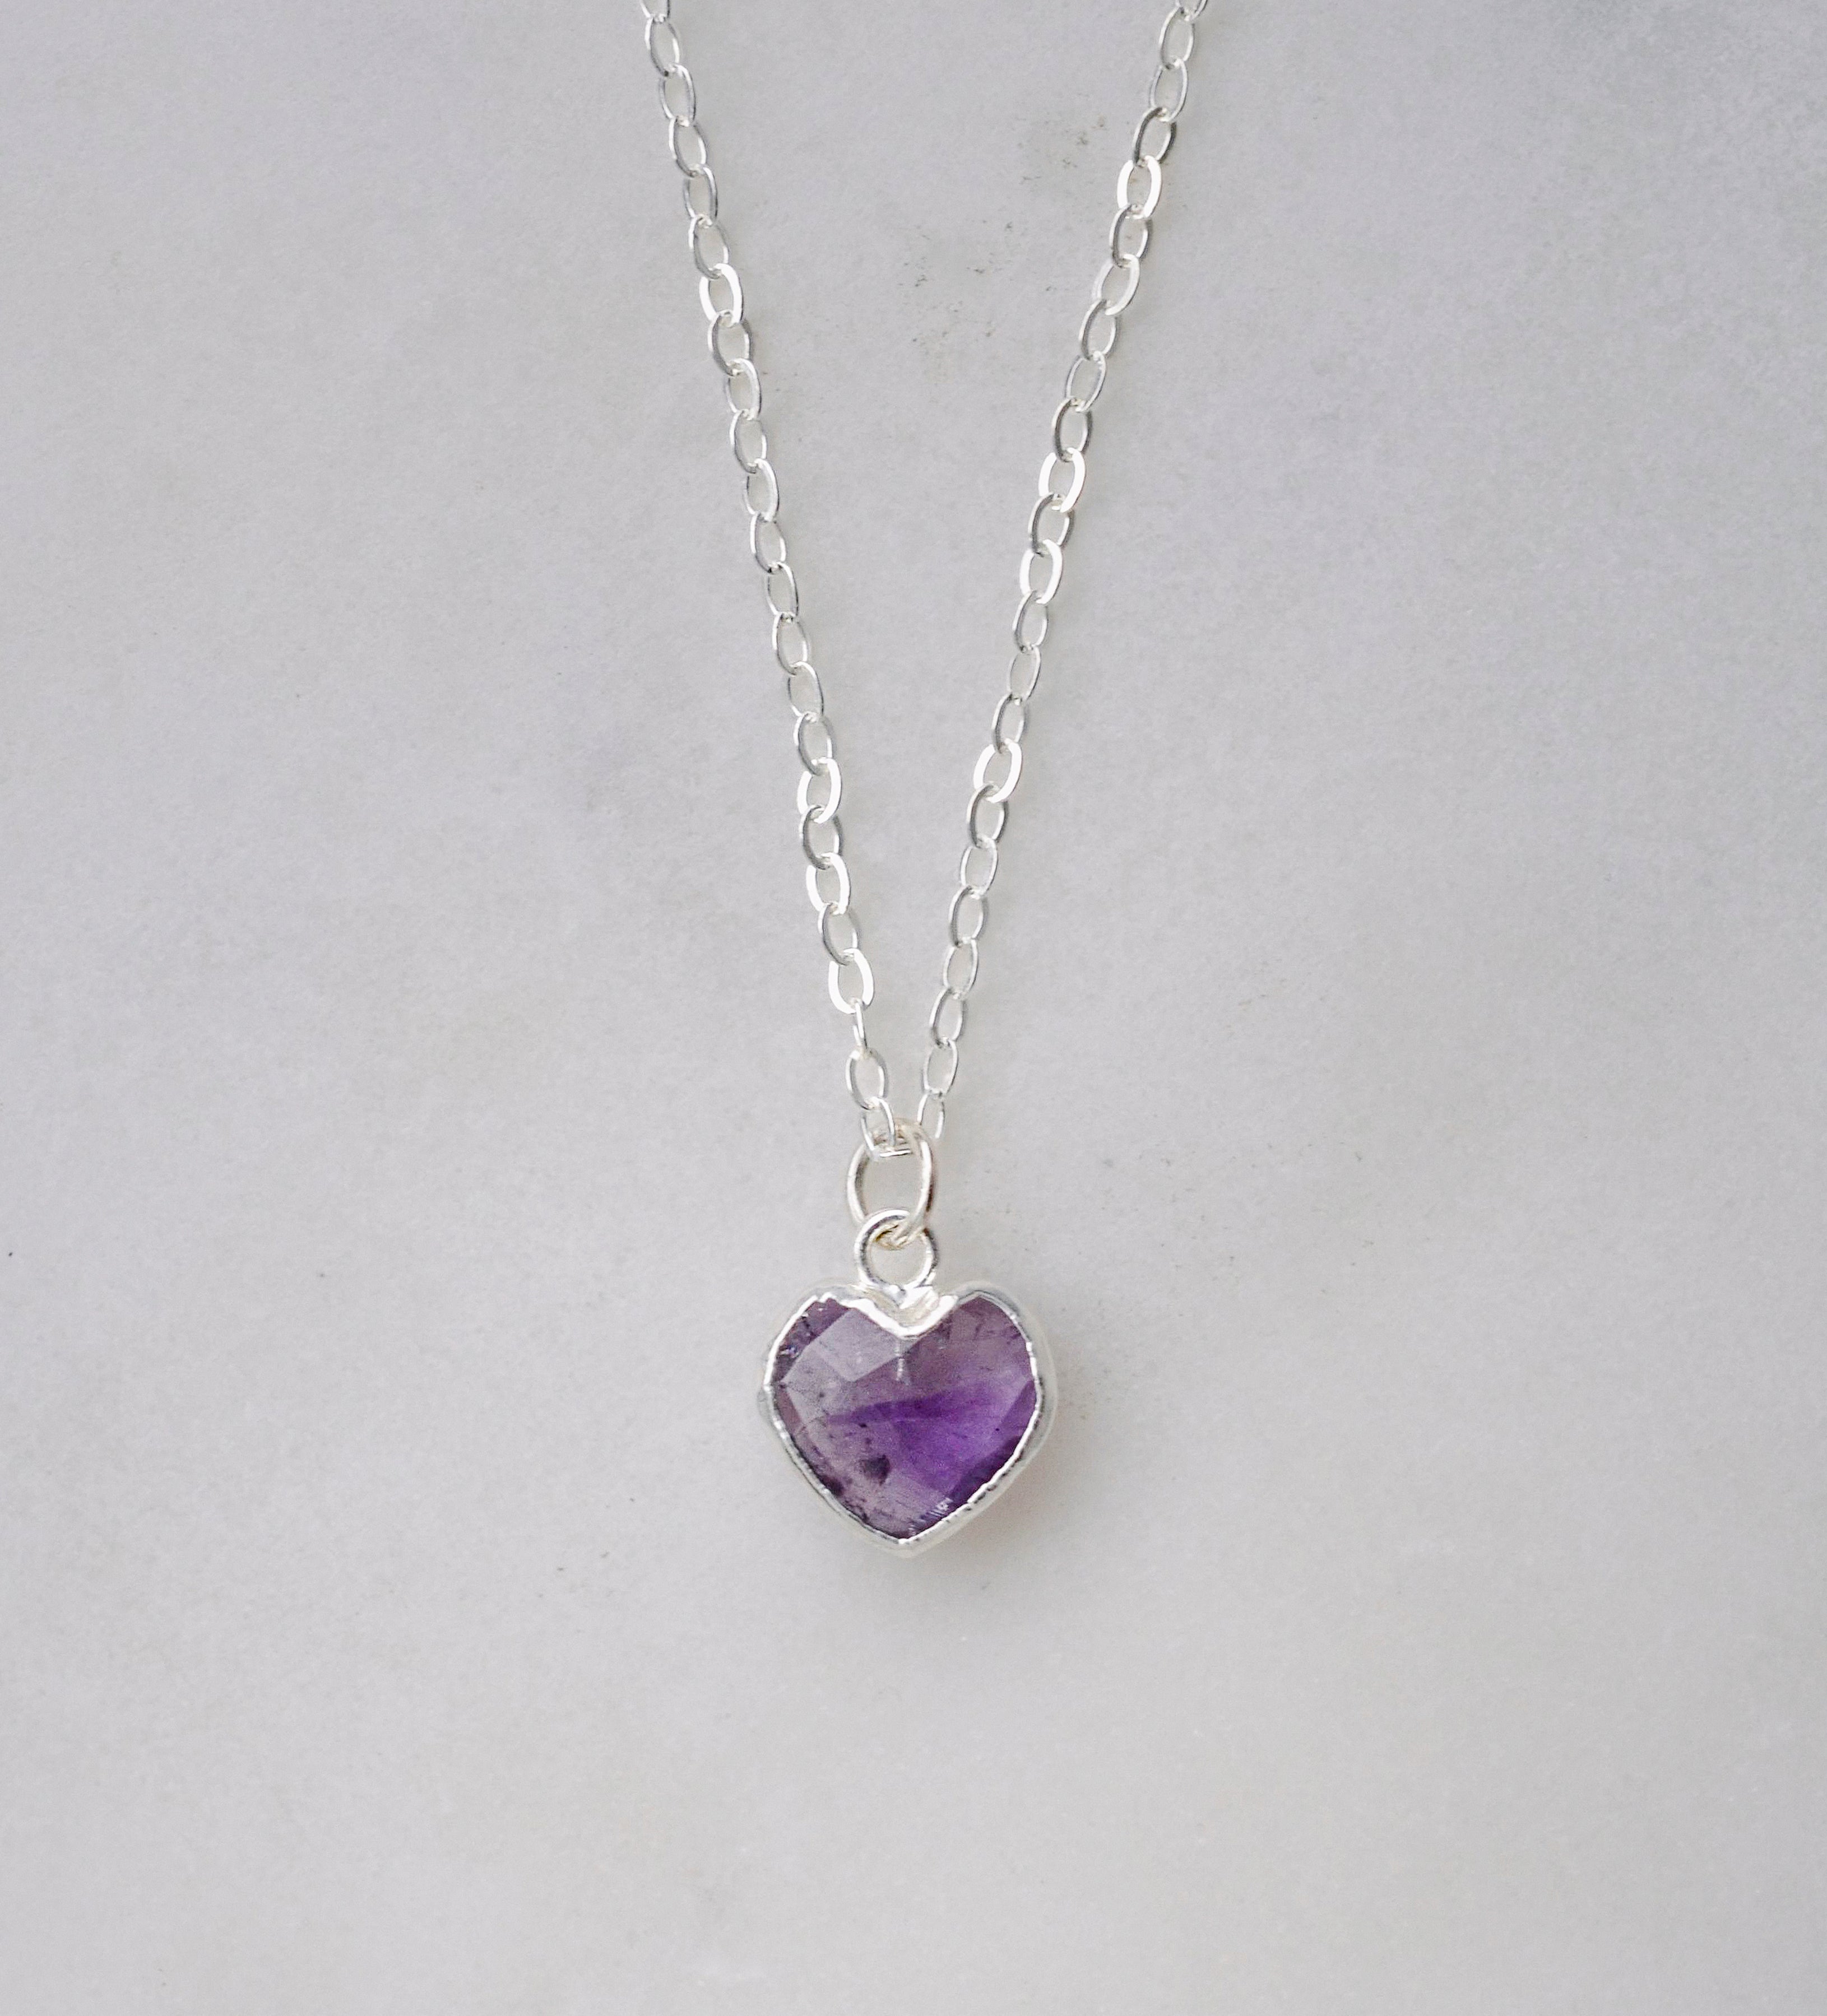 Statement green purple shade gemstone beaded necklace set at ₹2950 | Azilaa